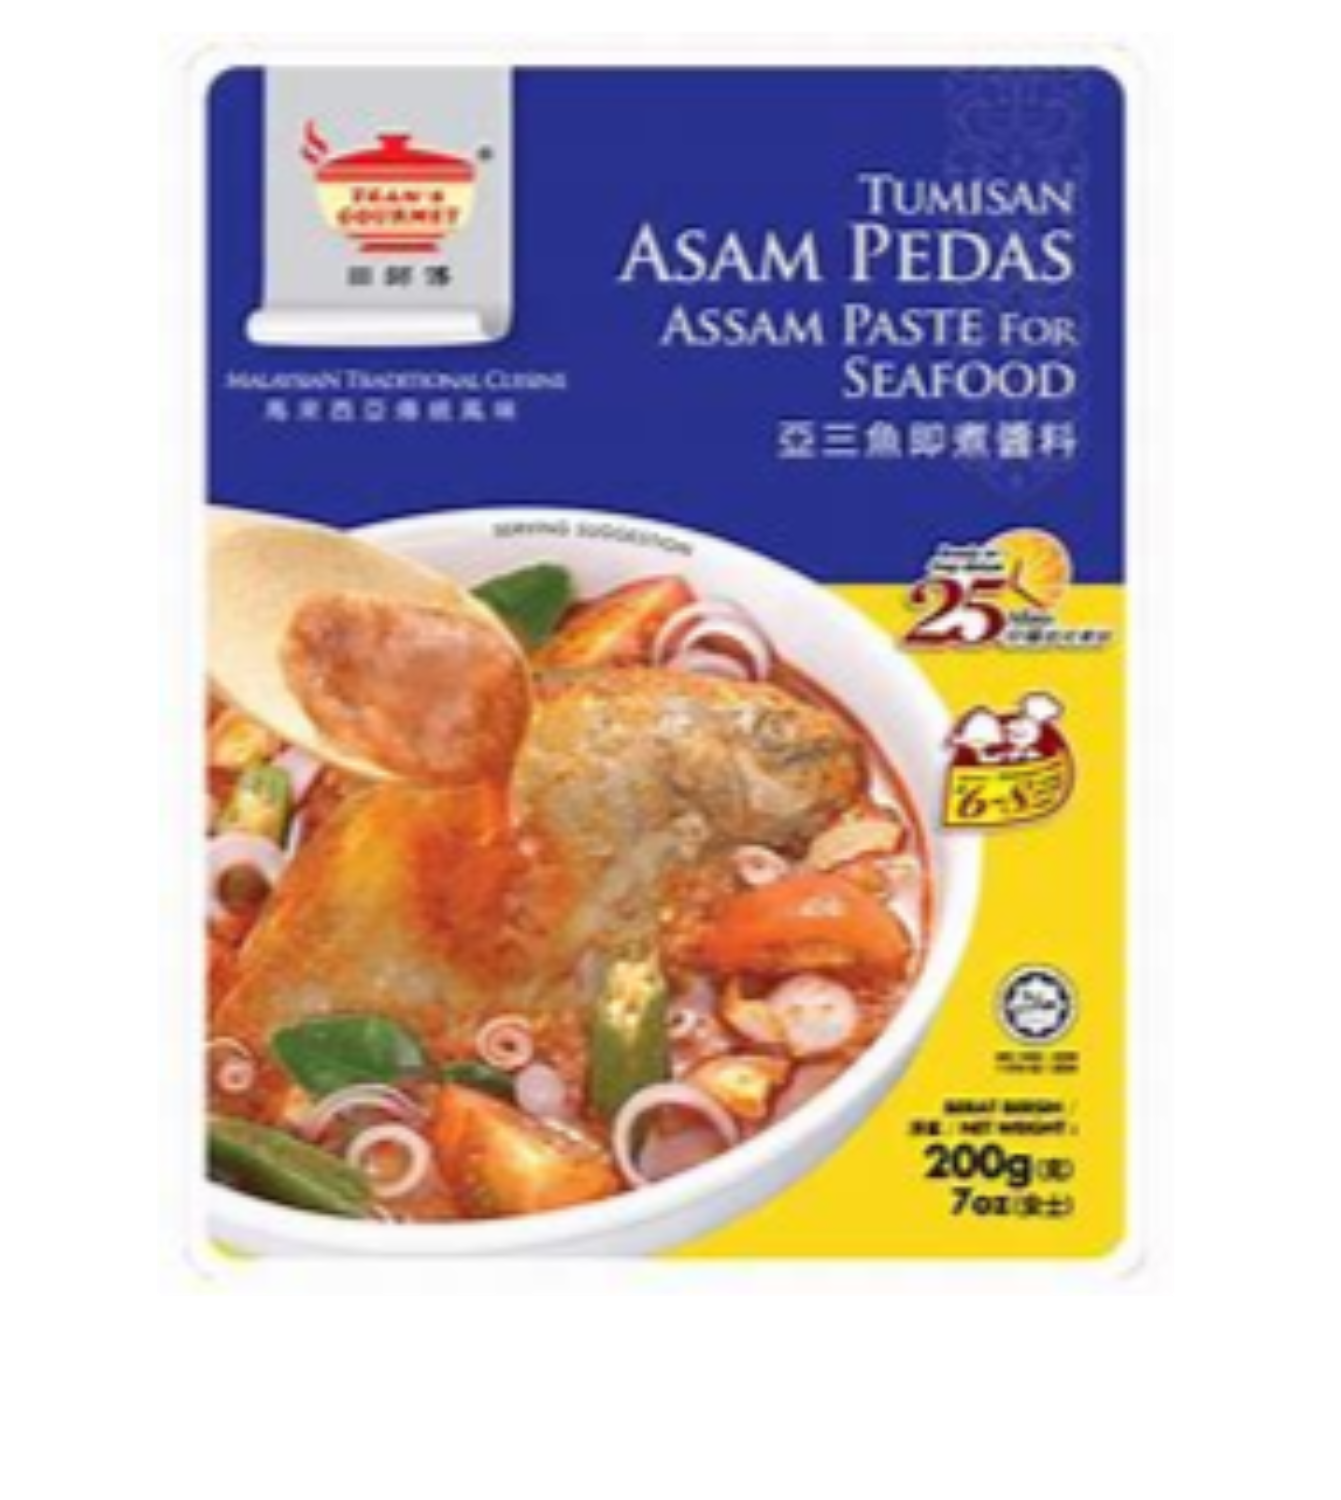 Teans Gourmet Tumisan Assam Pedas ( Assam Paste for Seafood)